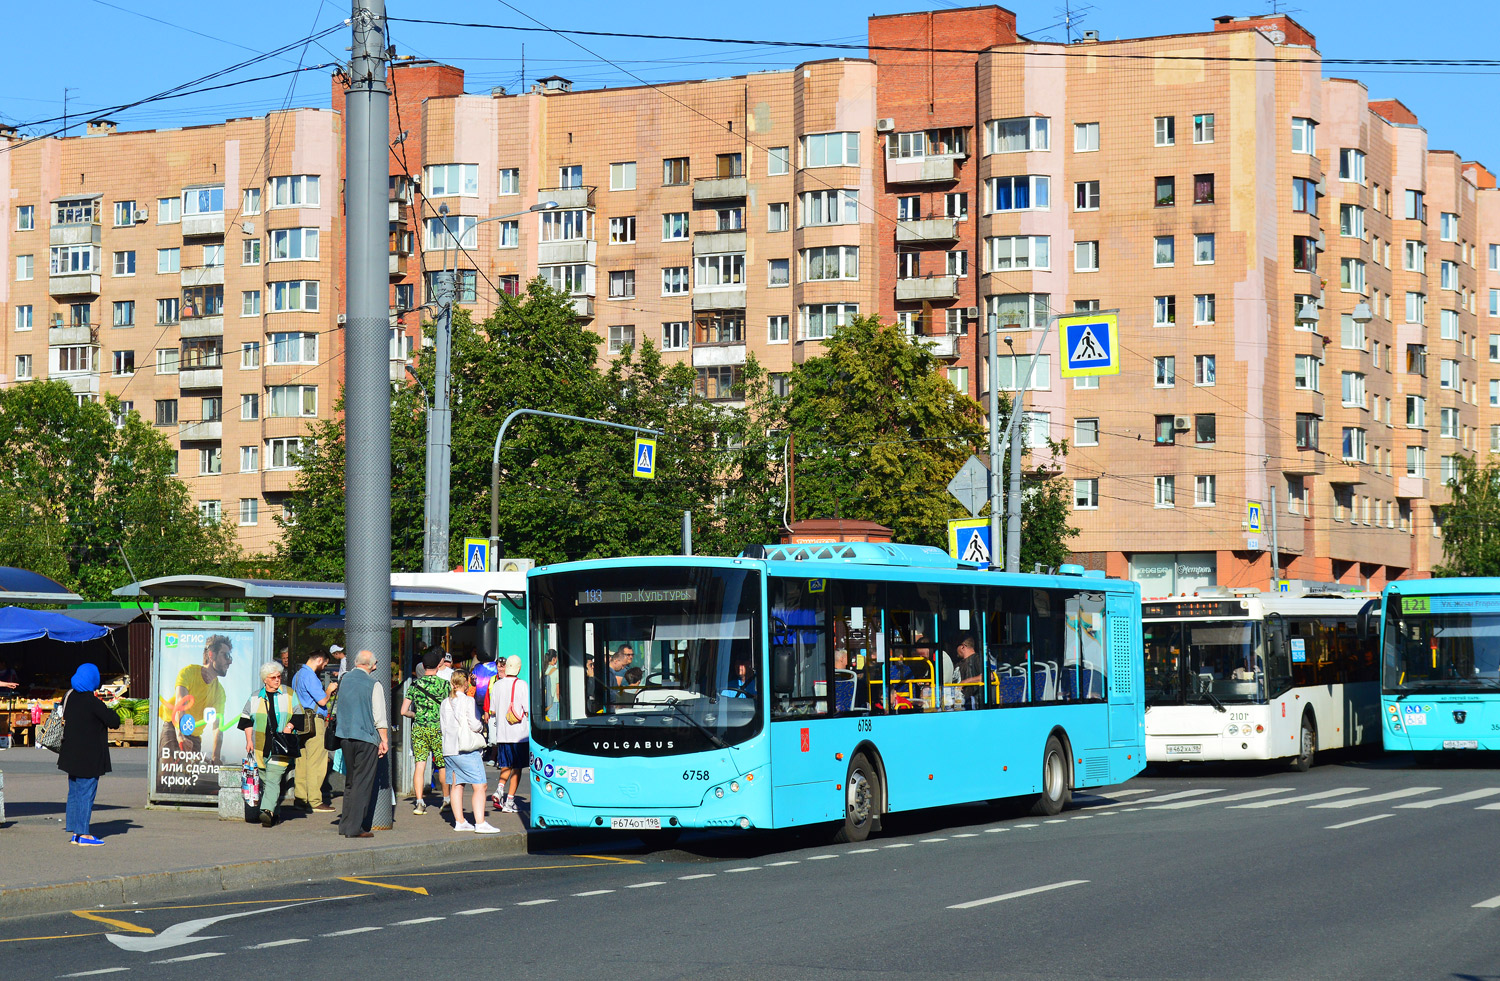 Saint Petersburg, Volgabus-5270.G2 (LNG) # 6758